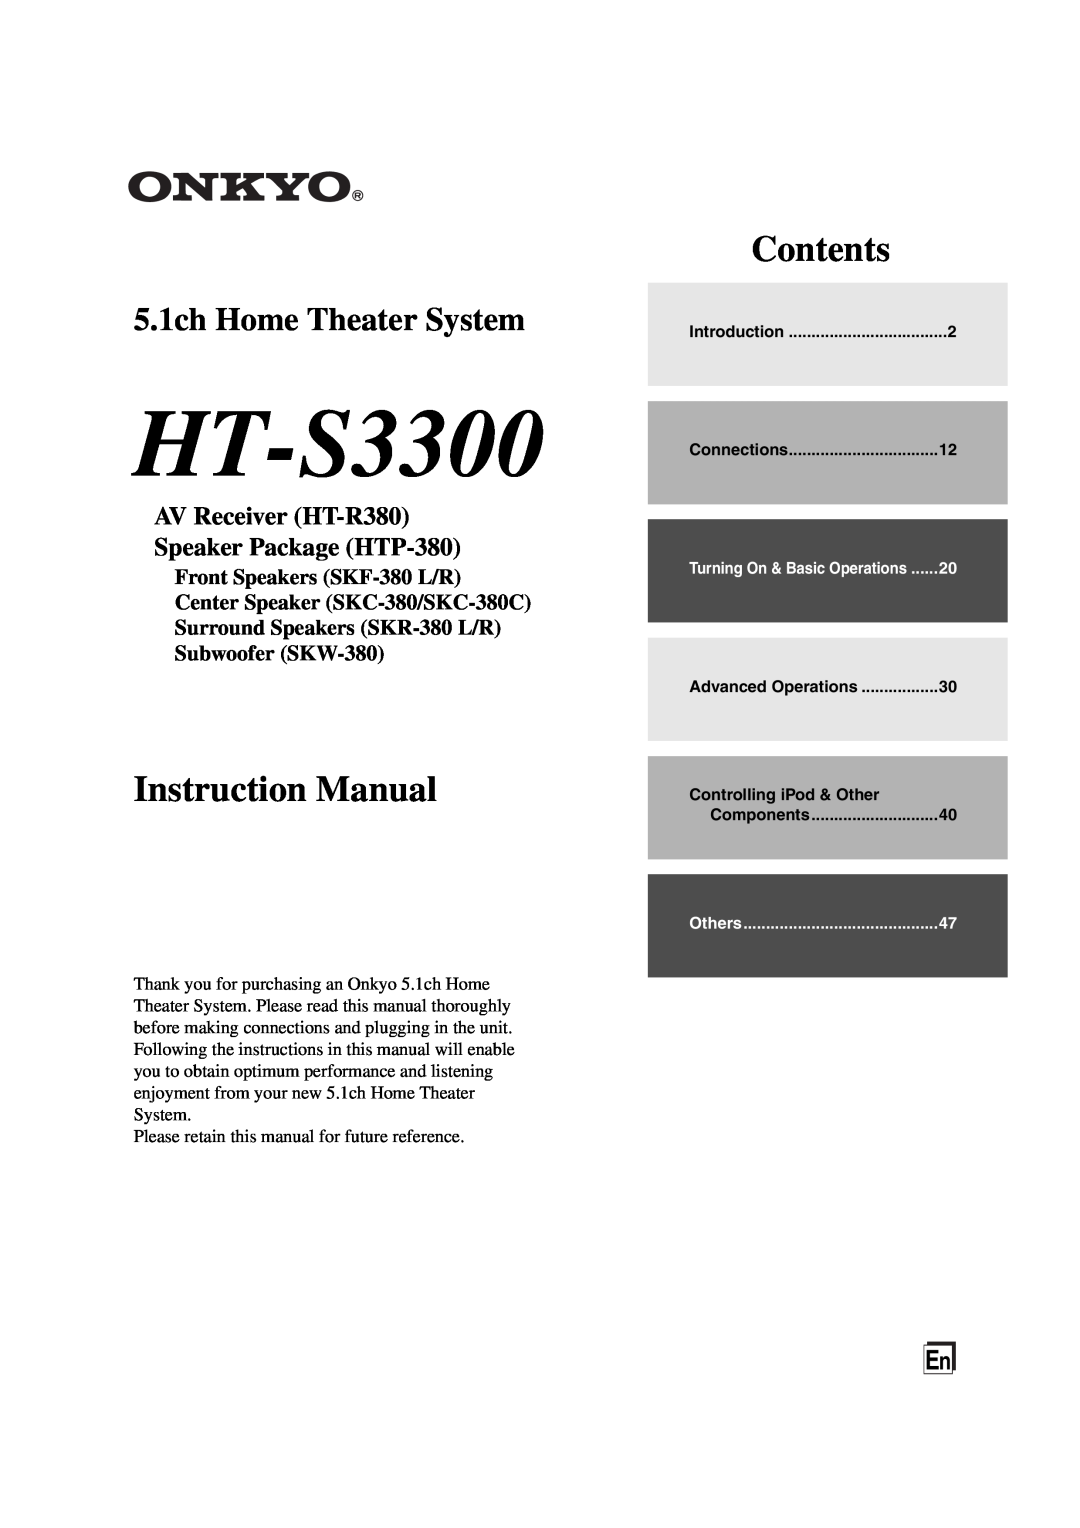 Onkyo HT-S3300 instruction manual Front Speakers SKF-380L/R, Center Speaker SKC-380/SKC-380C, Contents 